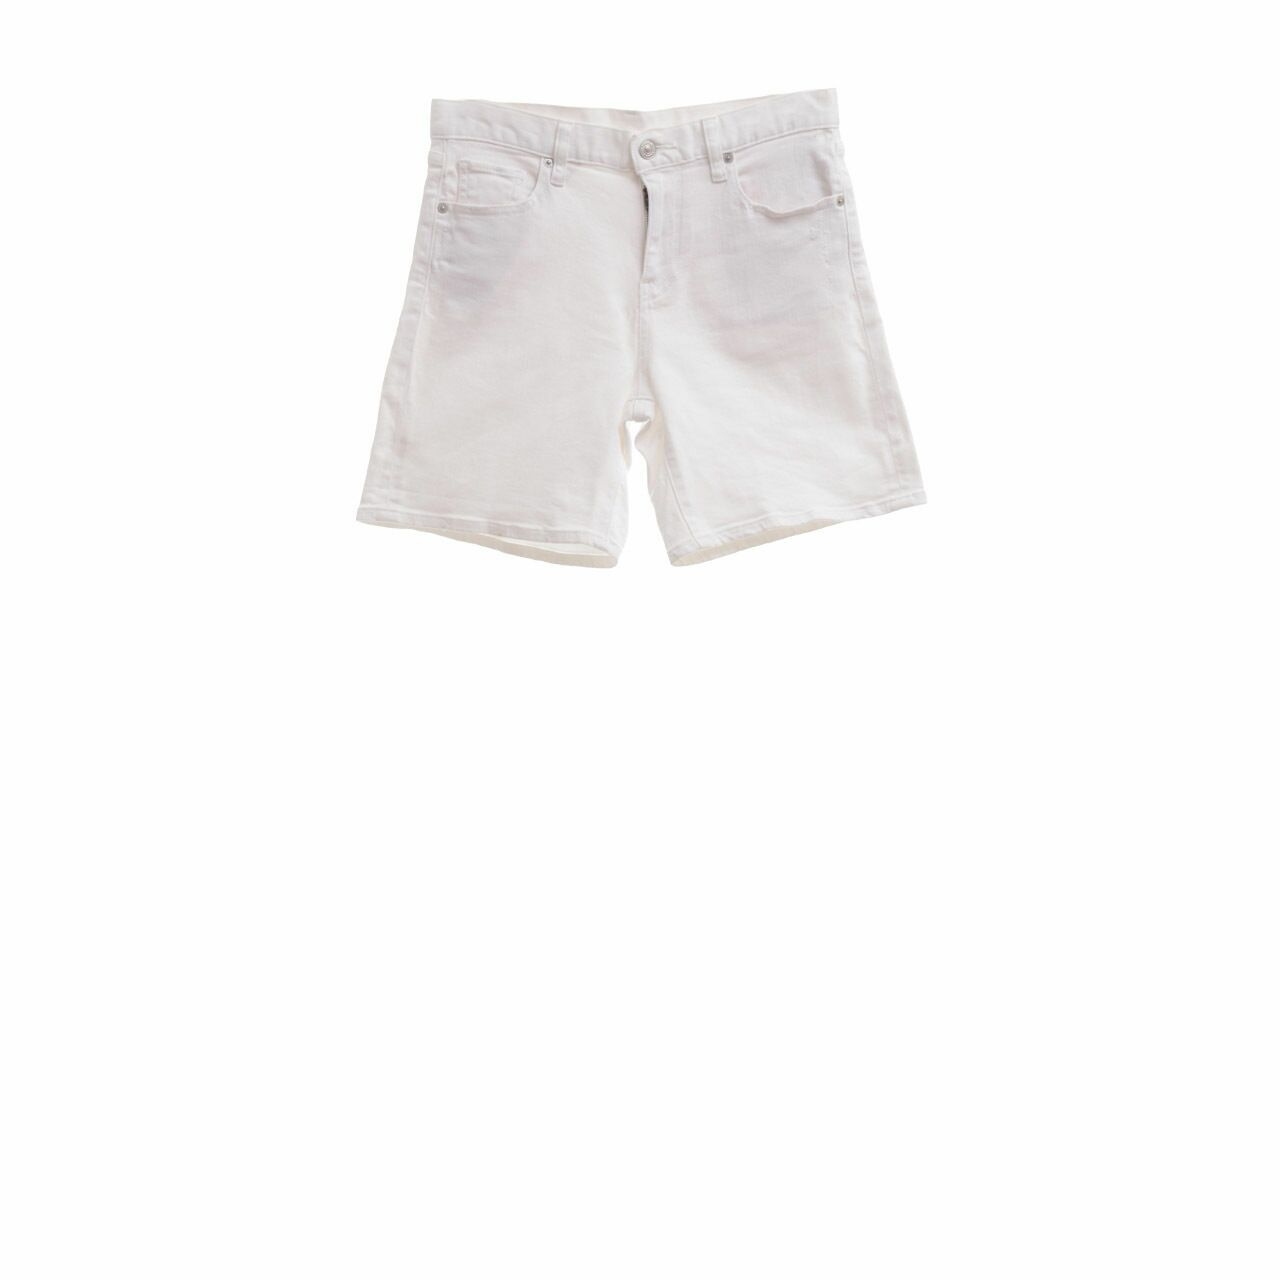 UNIQLO White Shorts Pants